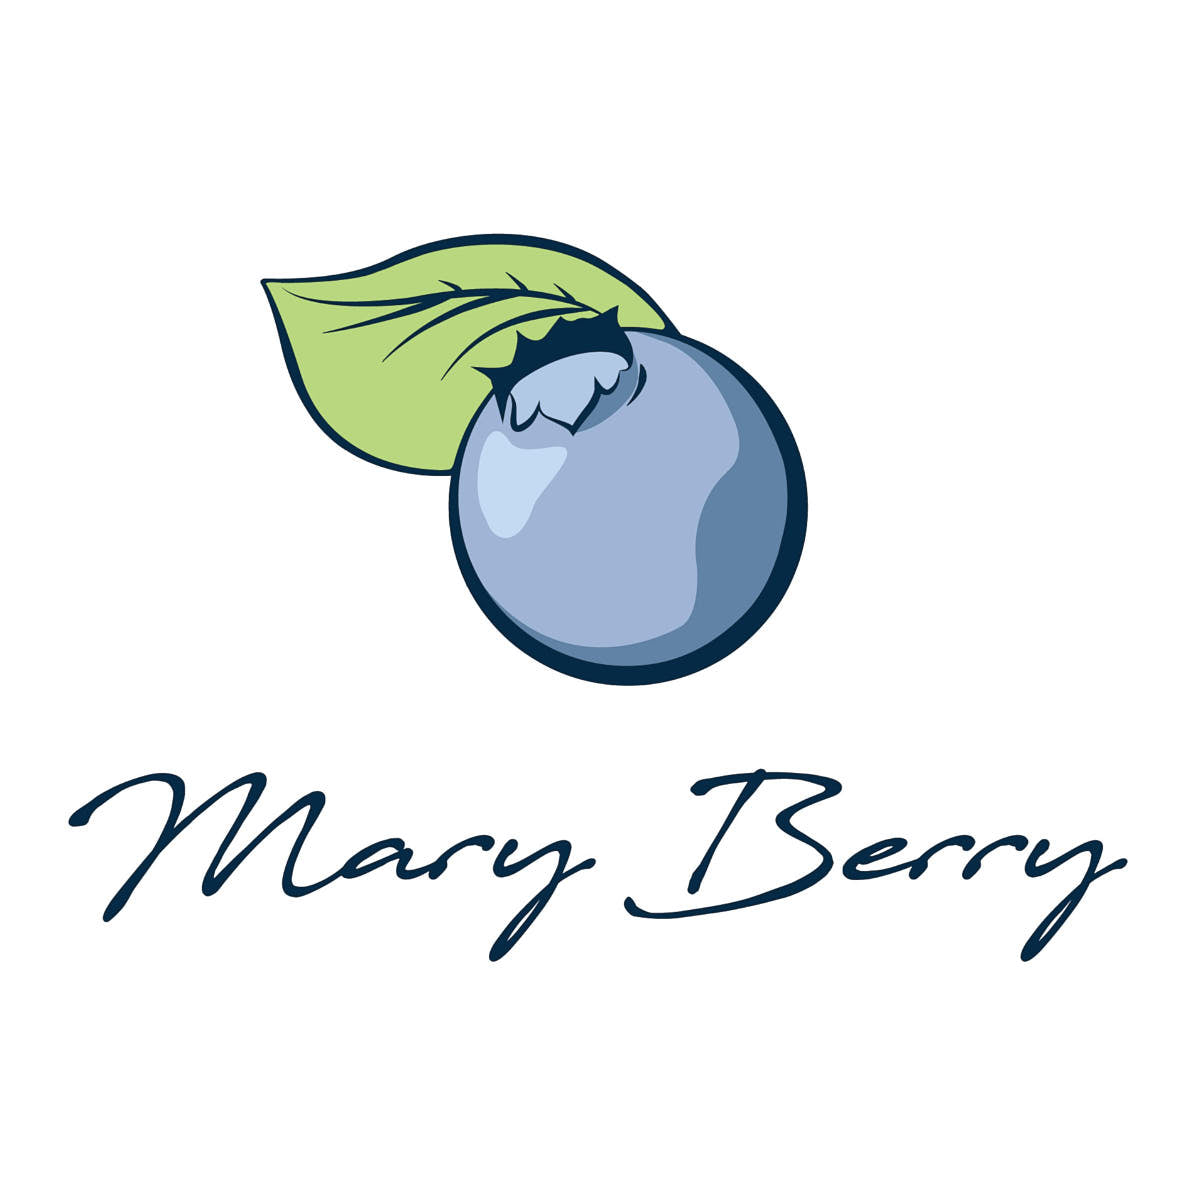 Mary Berry